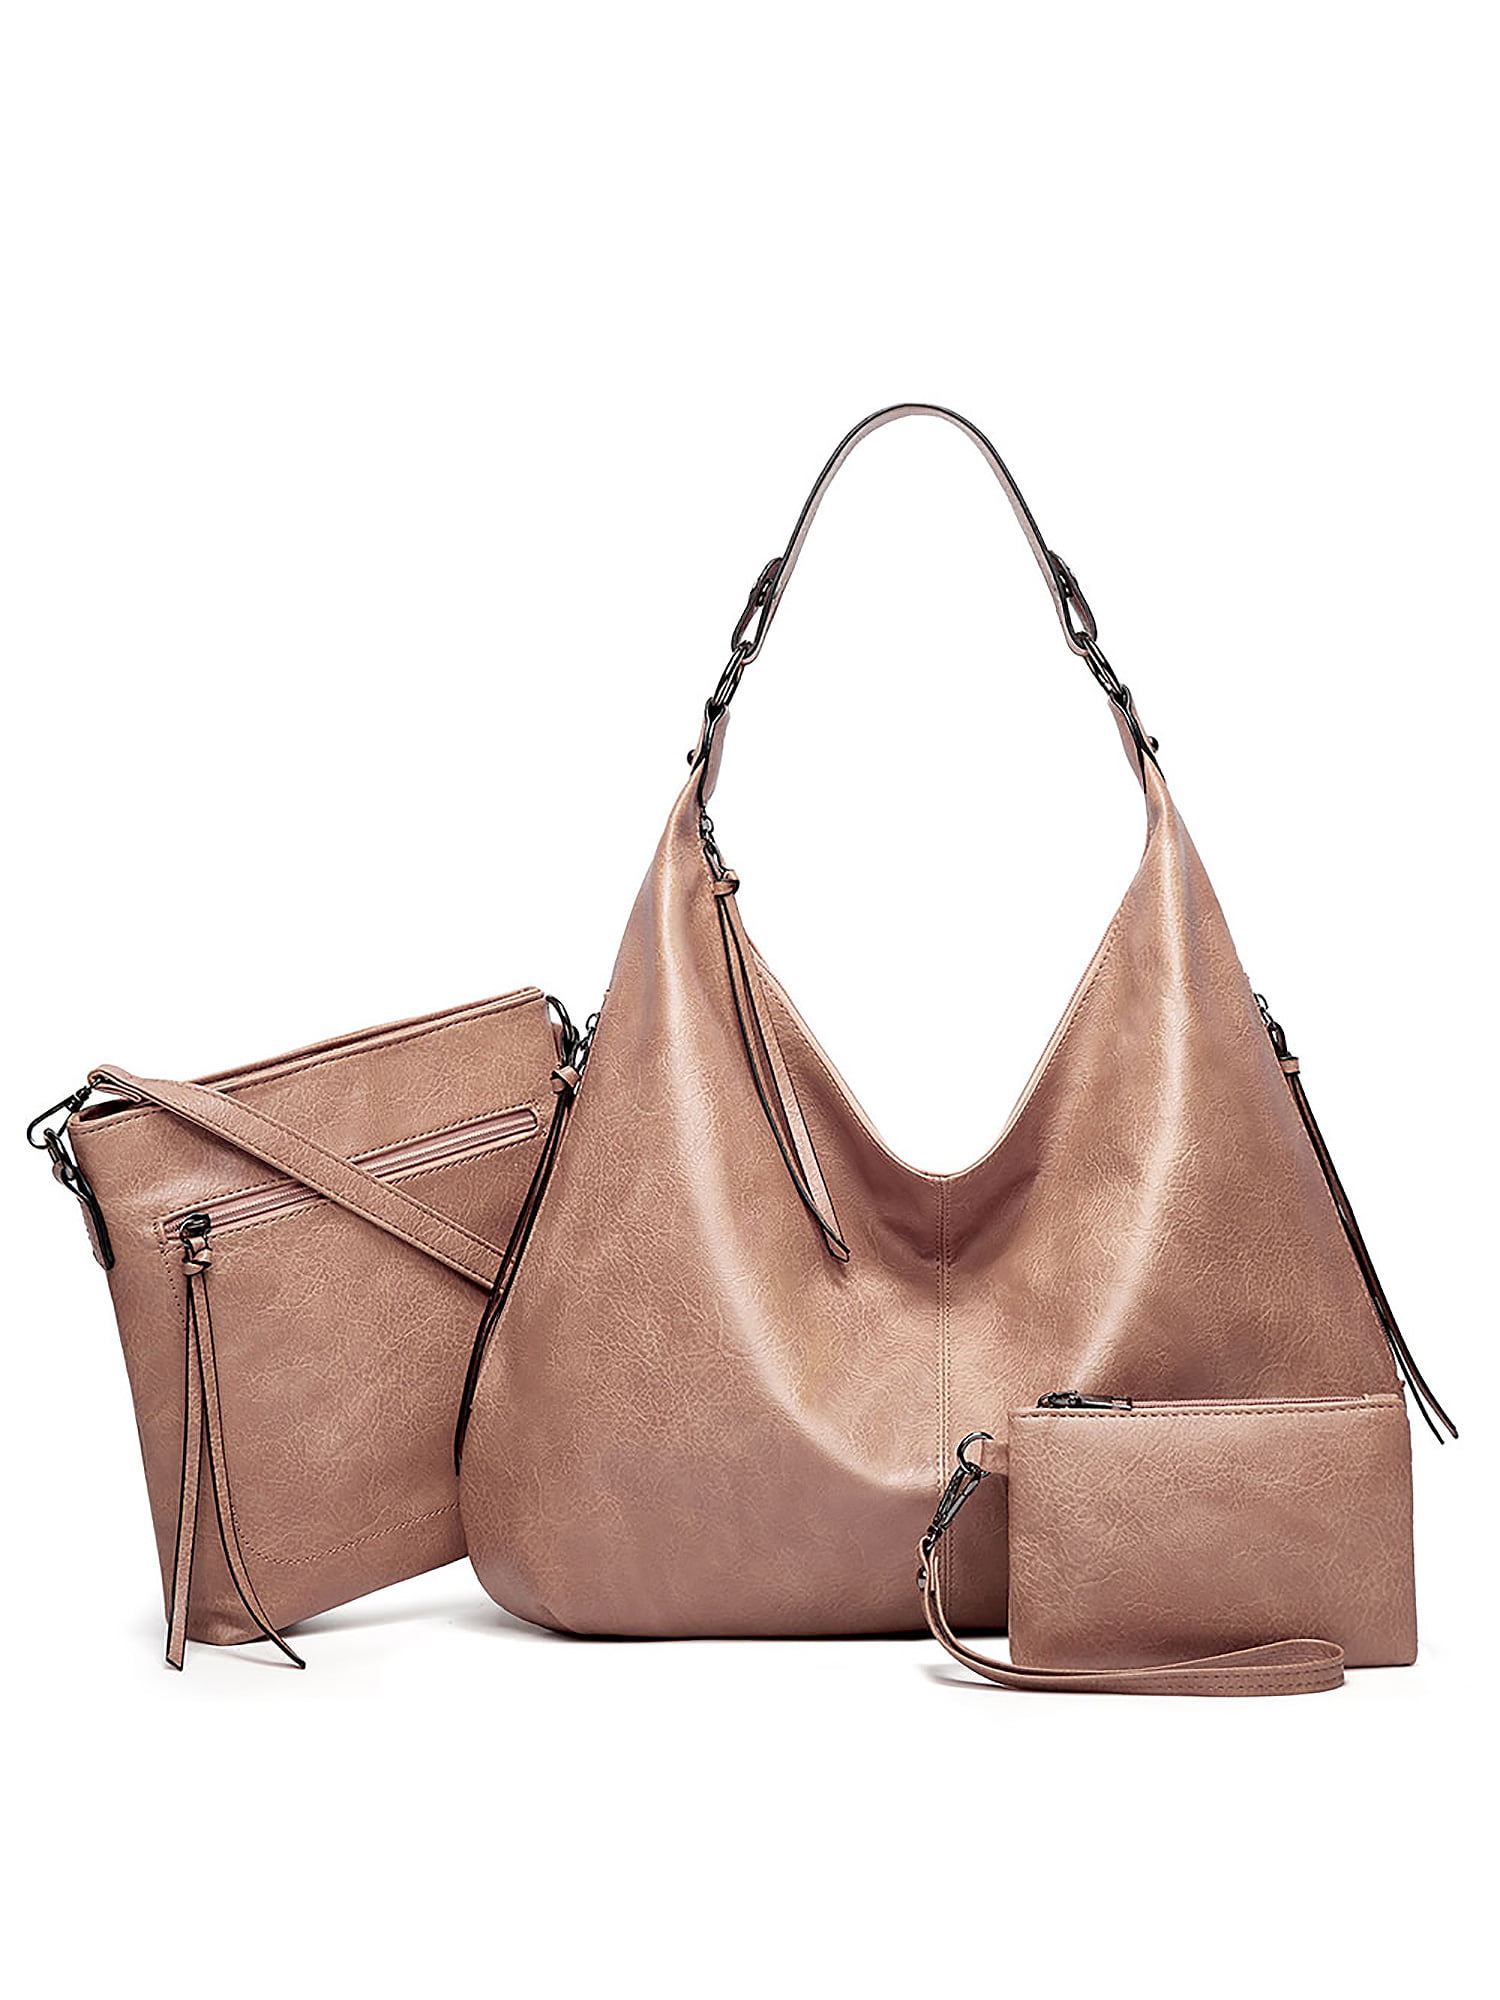 Handbag Ladies Shoulder Bag Tote Purse Womens Messenger Hobo Crossbody Bags Gift 